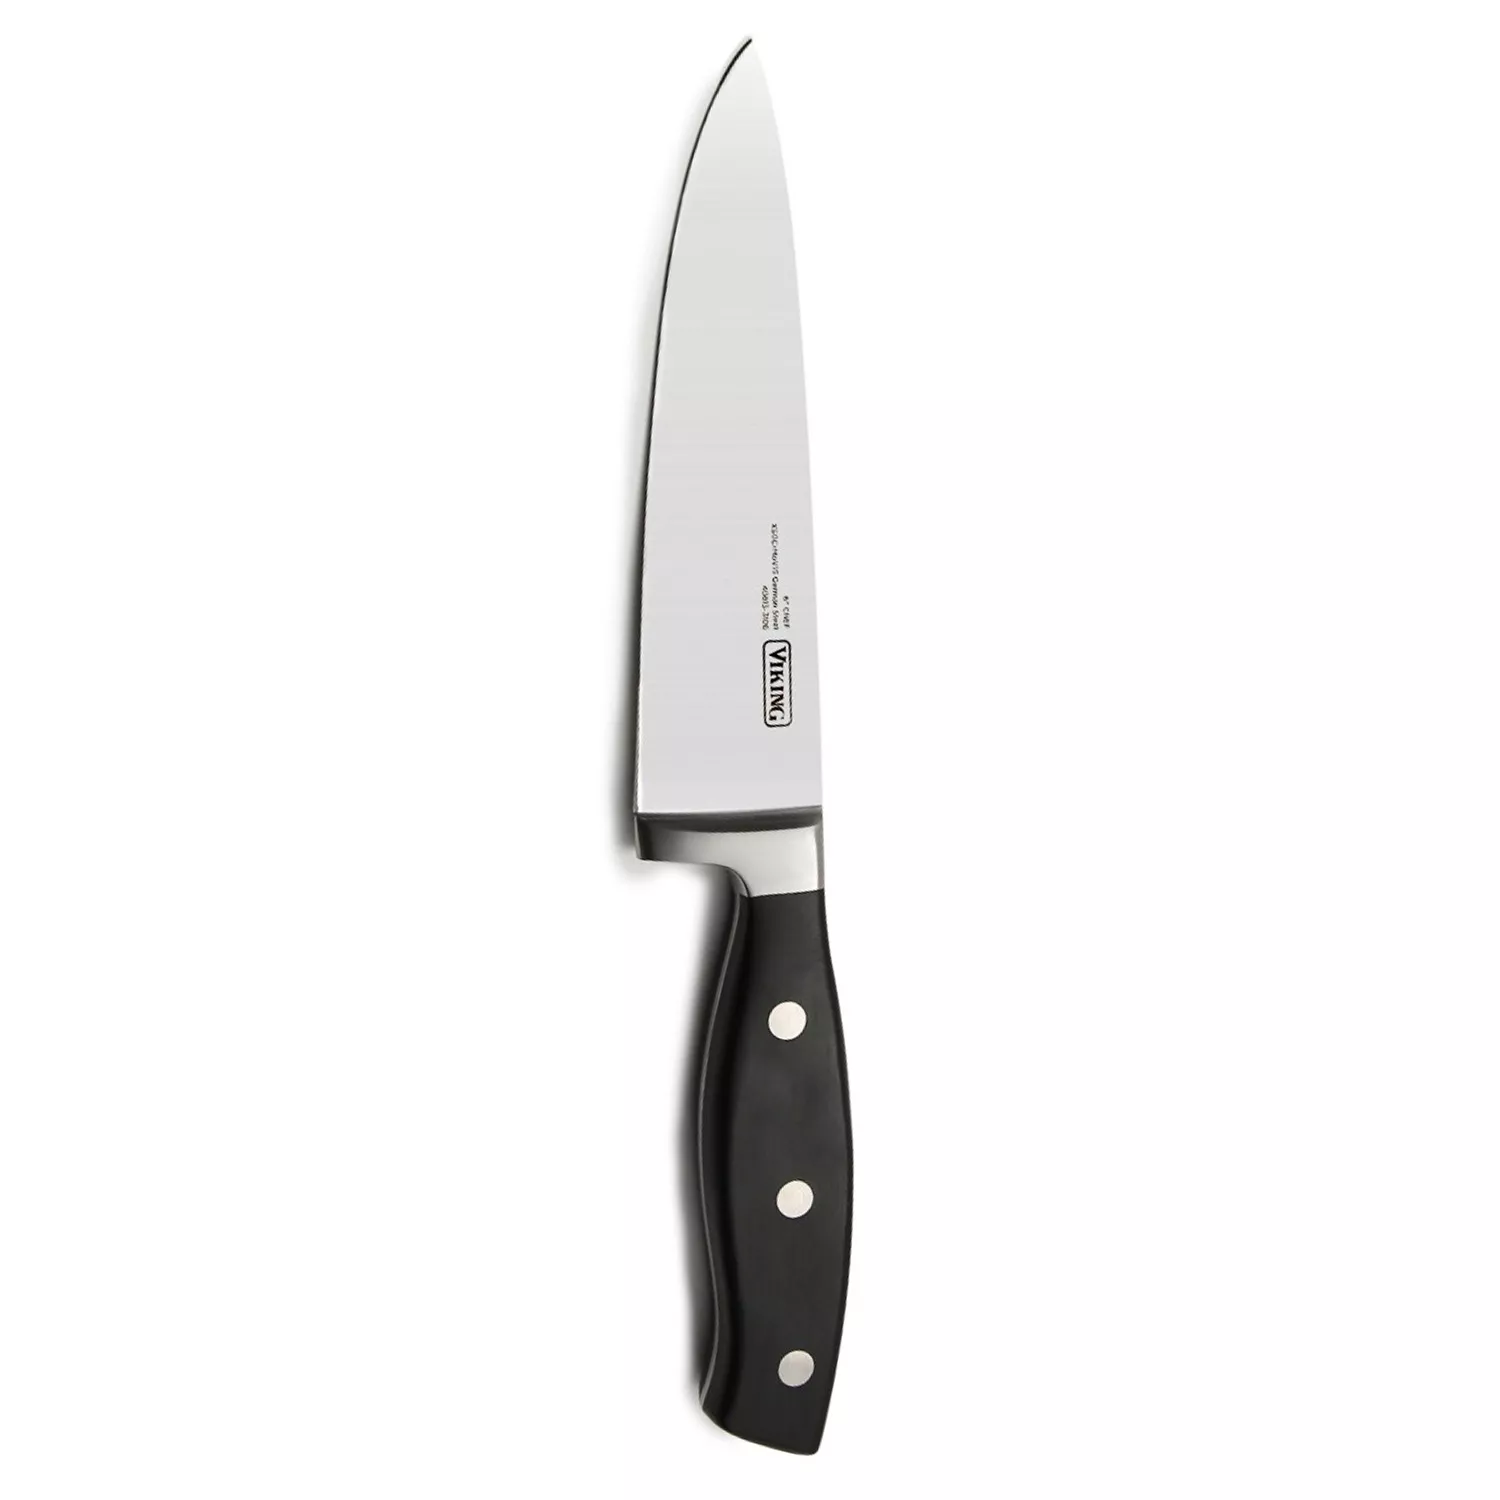 Kuhn Rikon 6-inch Colori Chef's Knife at Swiss Knife Shop